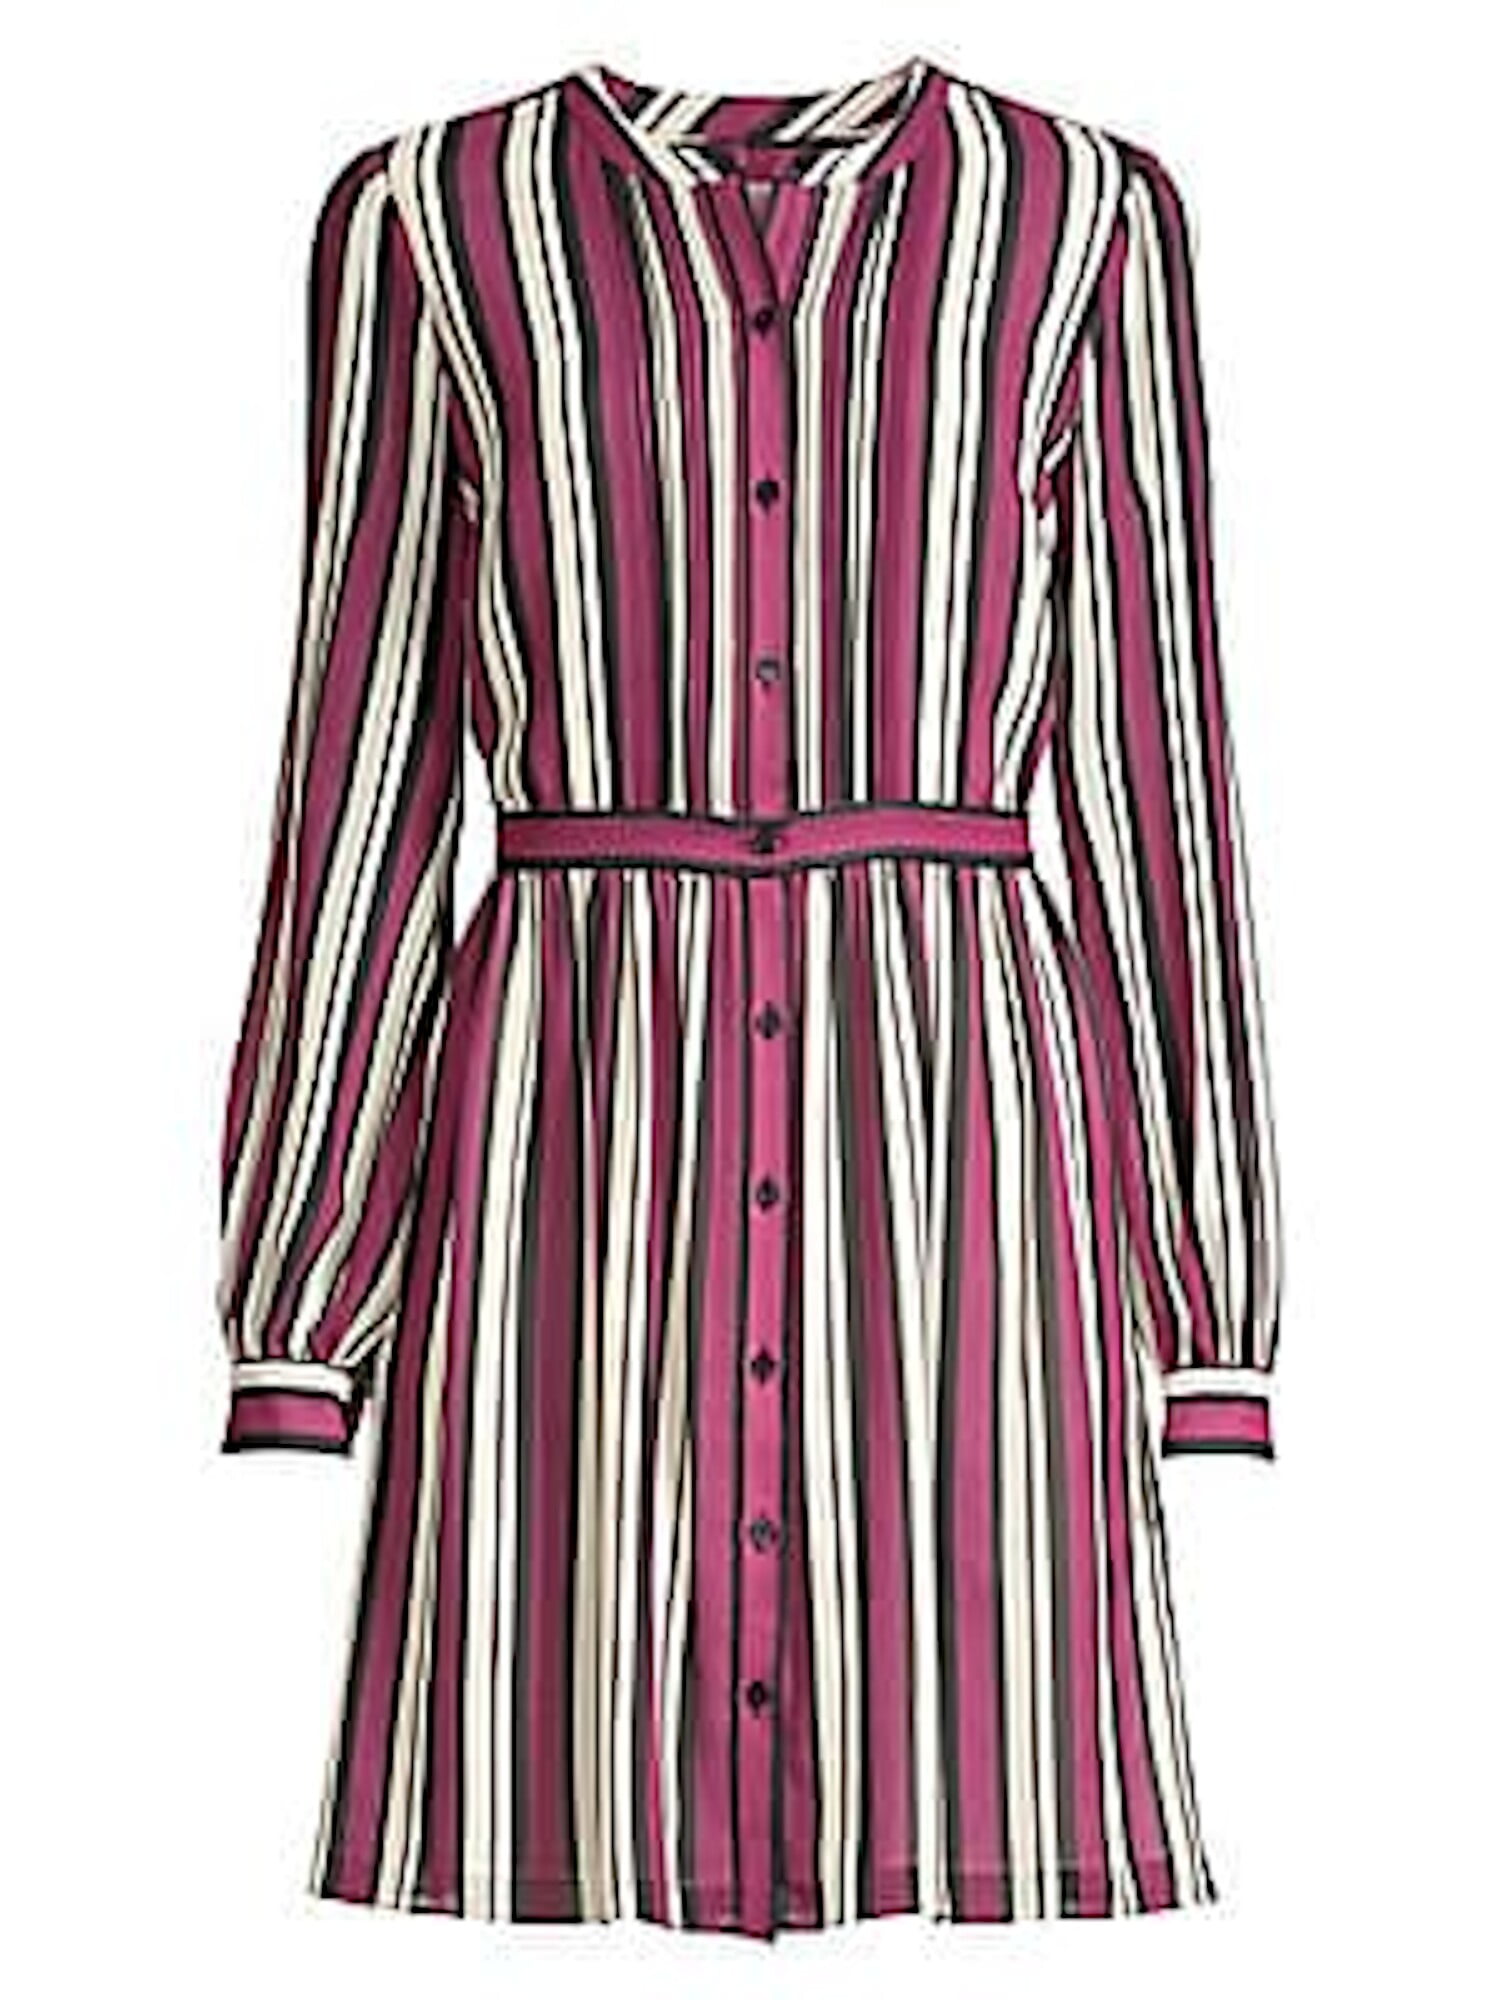 michael kors striped shirt dress